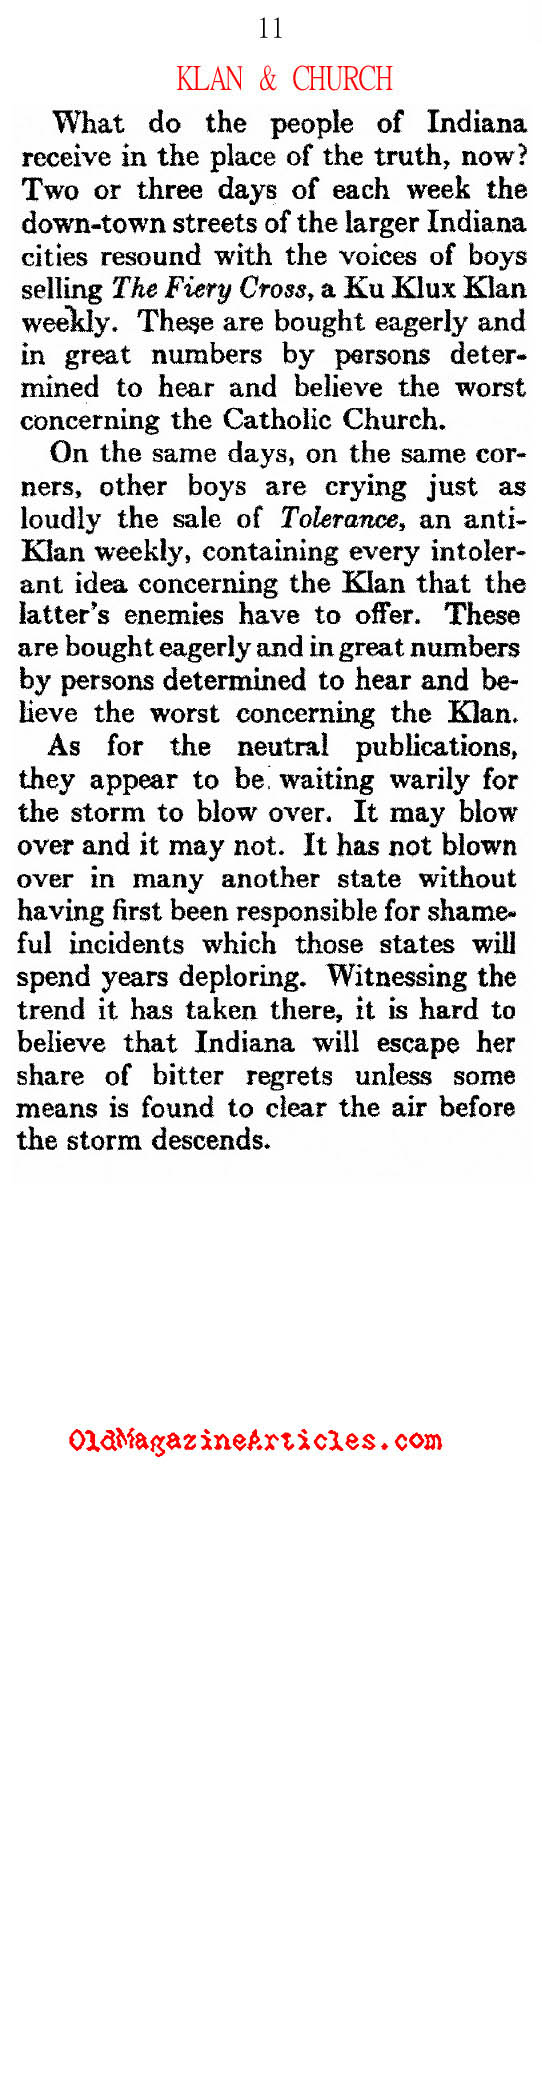 The KKK Popularity in Indiana (Atlantic Monthly, 1923)